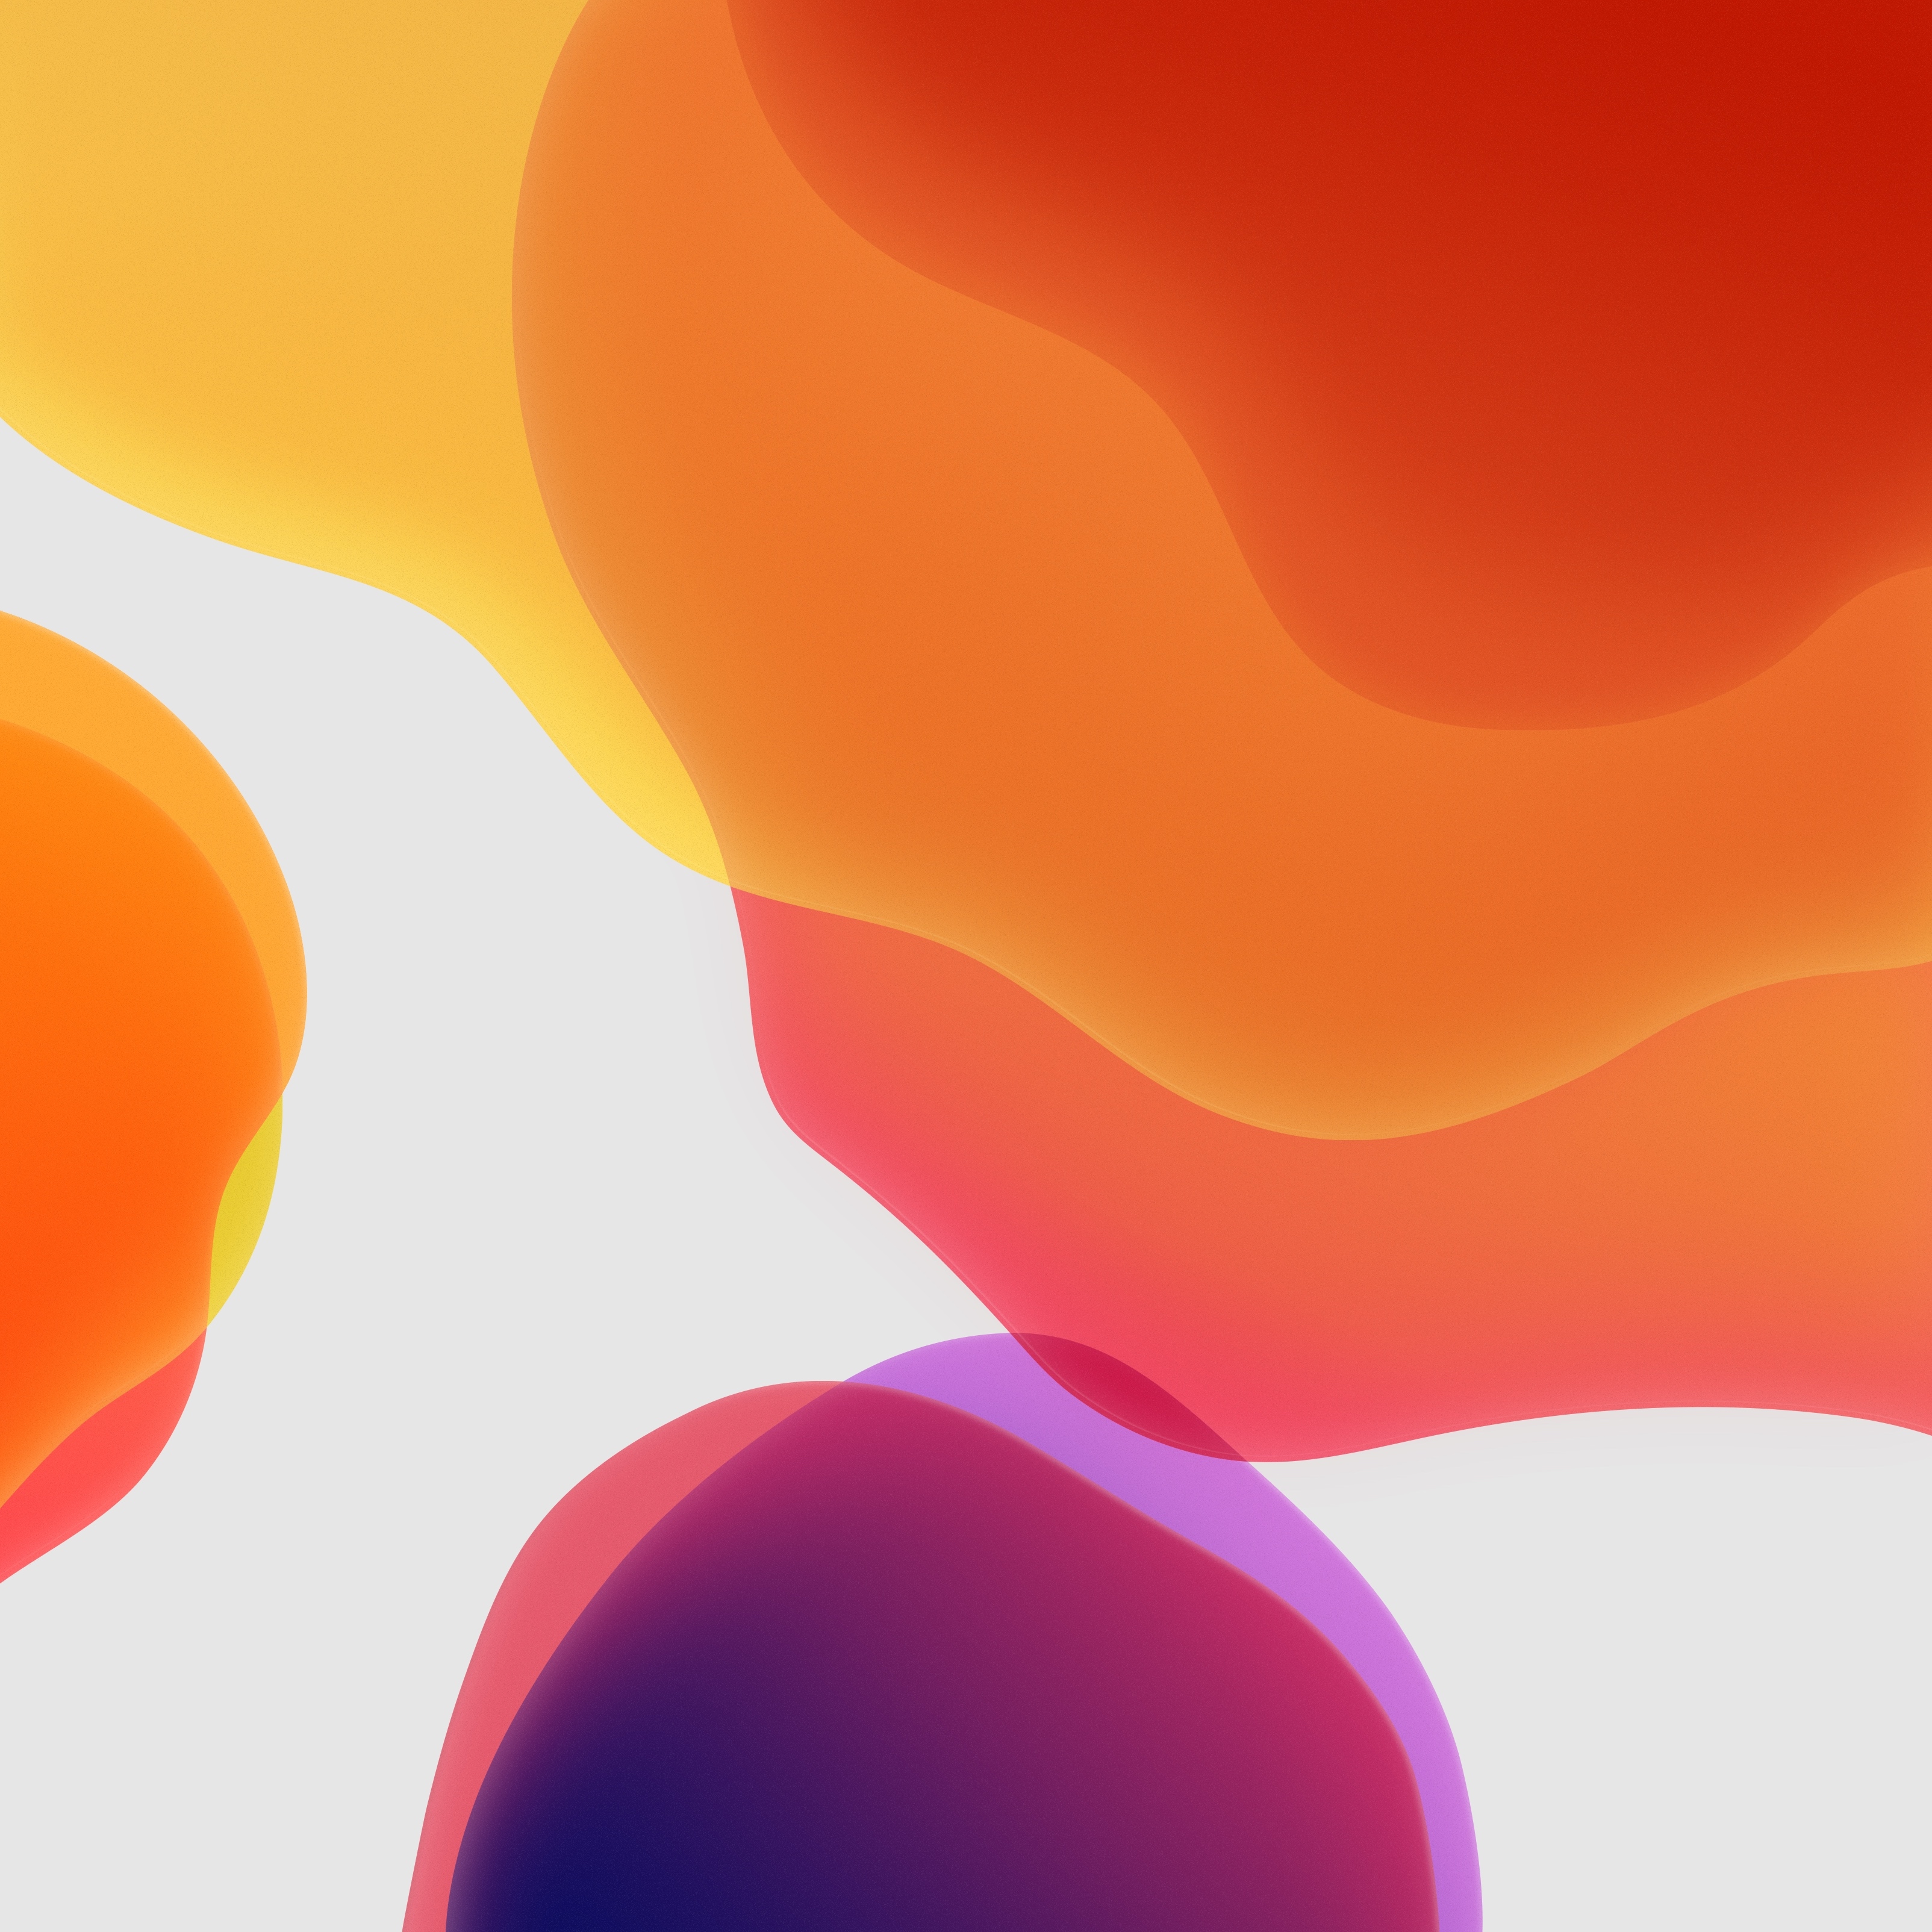 Light iOS 13 wallpaper in orange